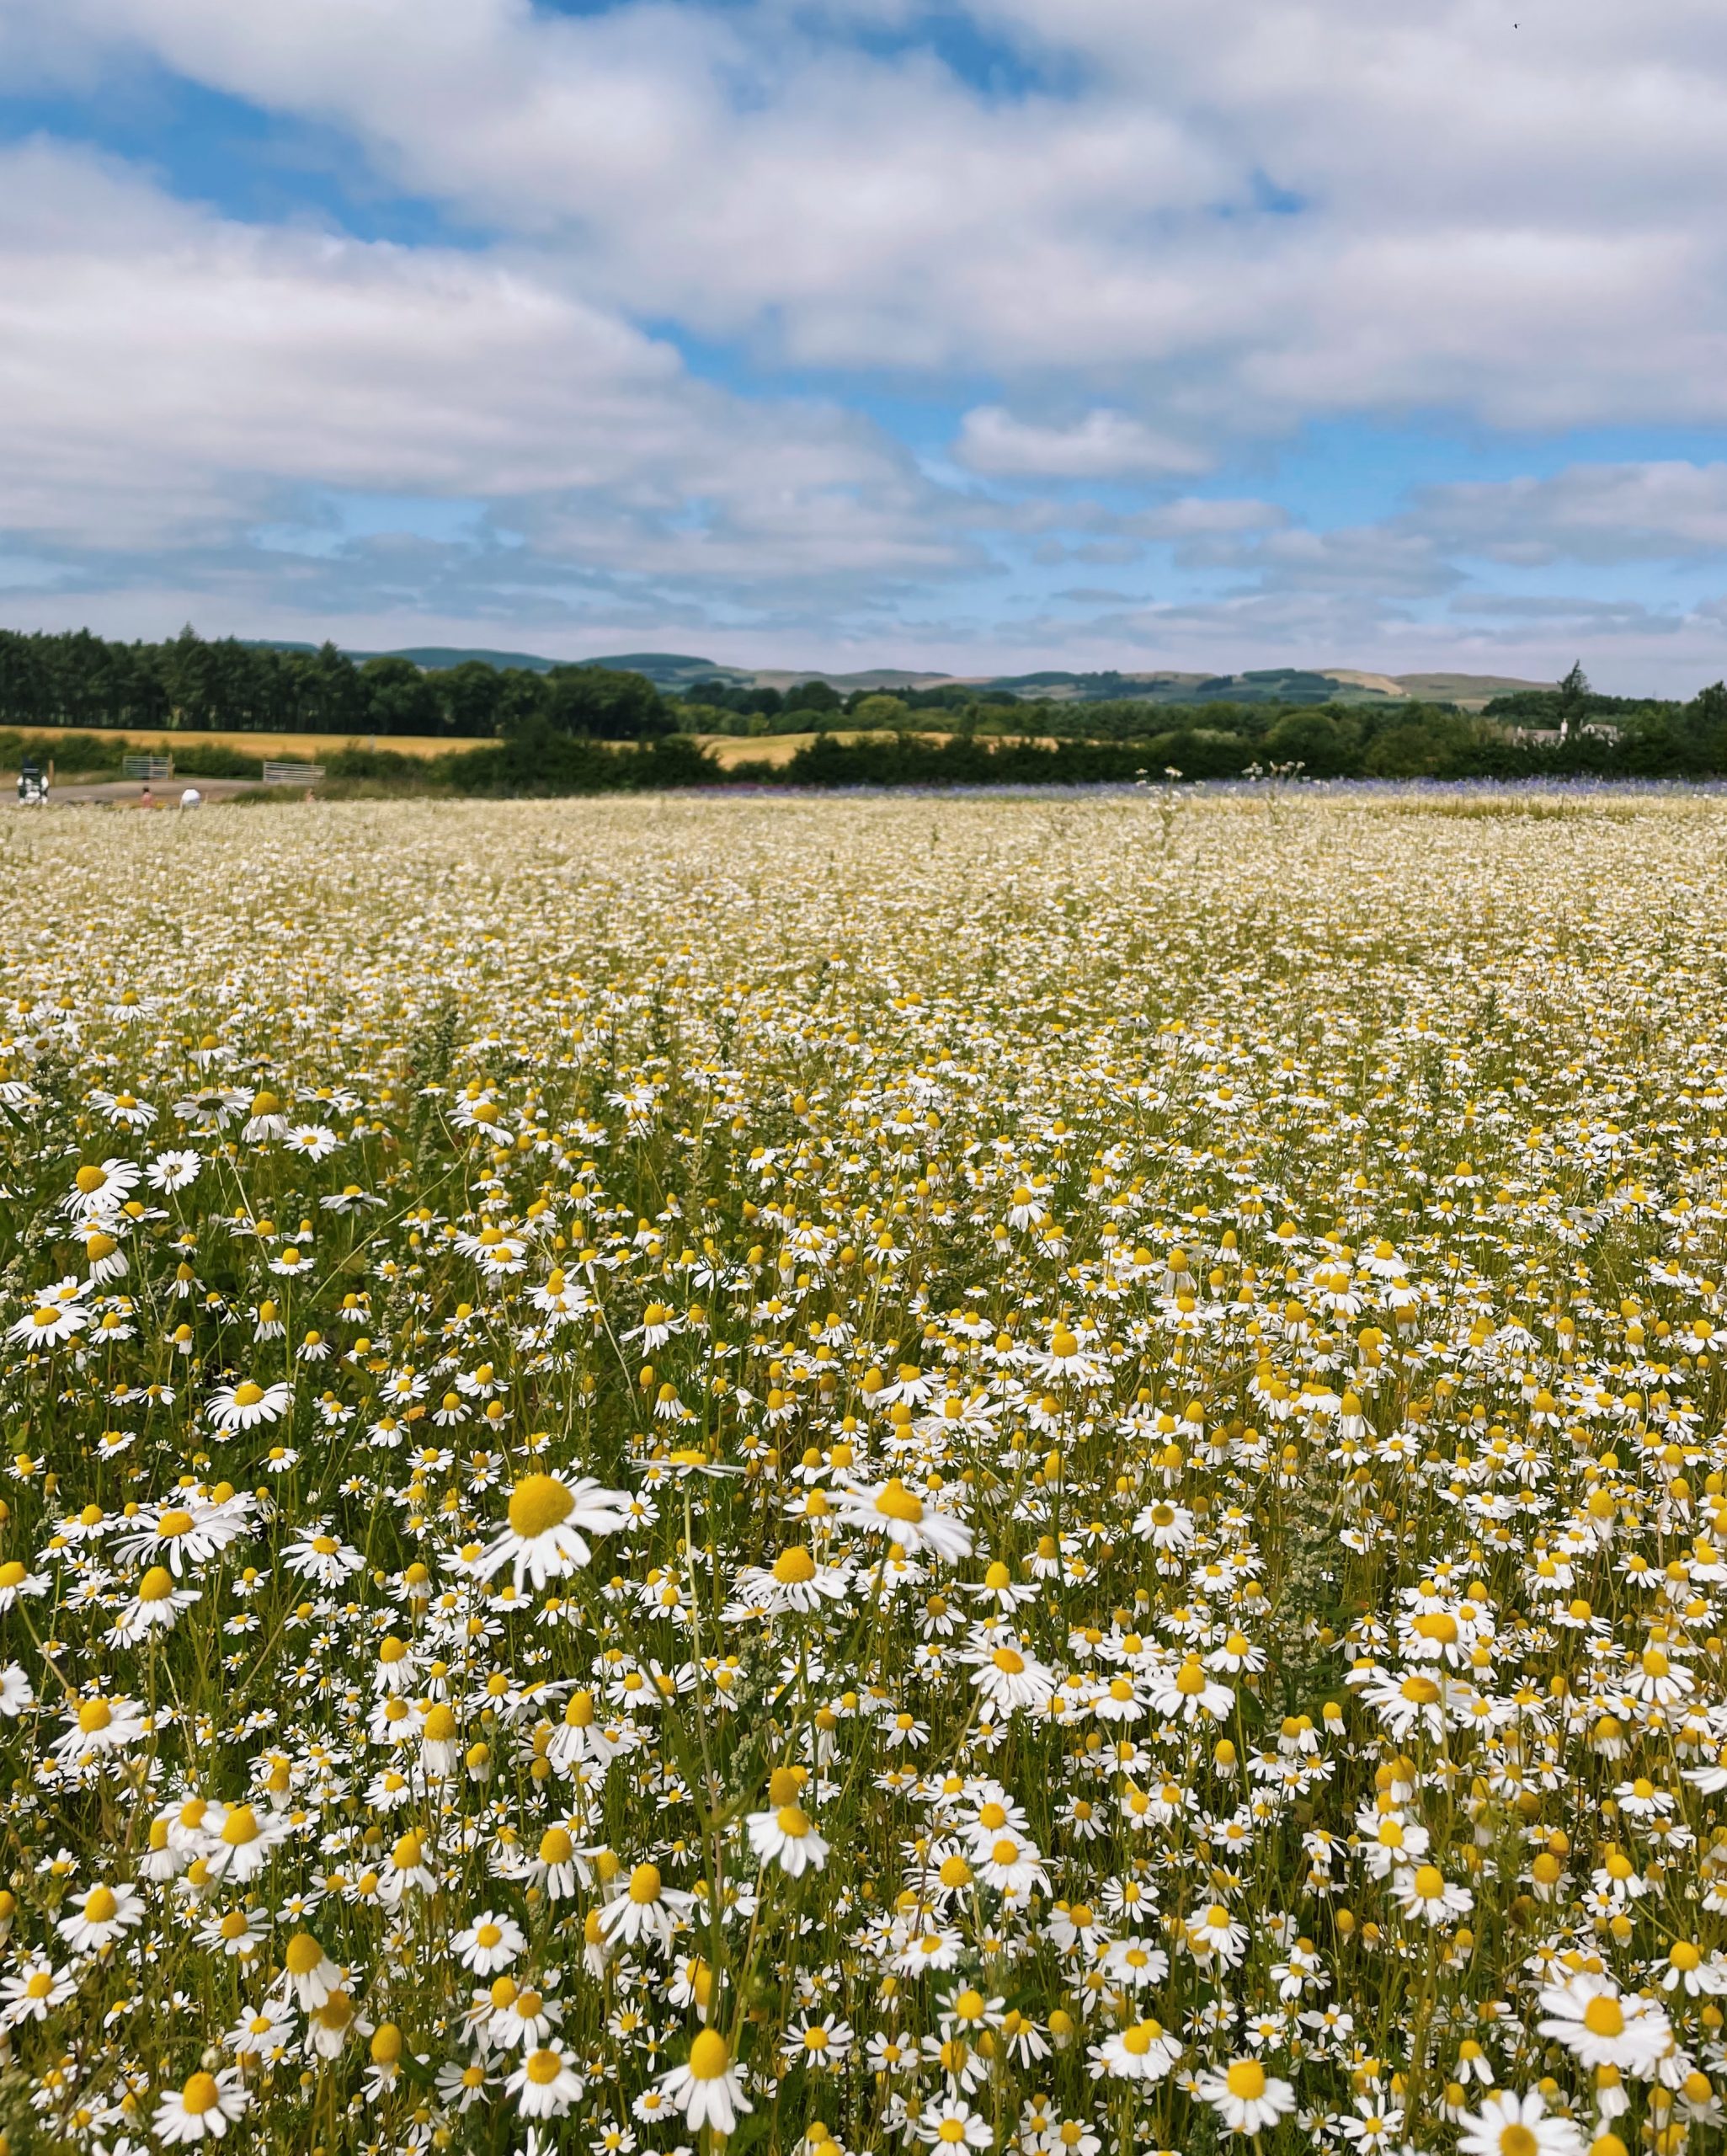 Scottish Lavender Field